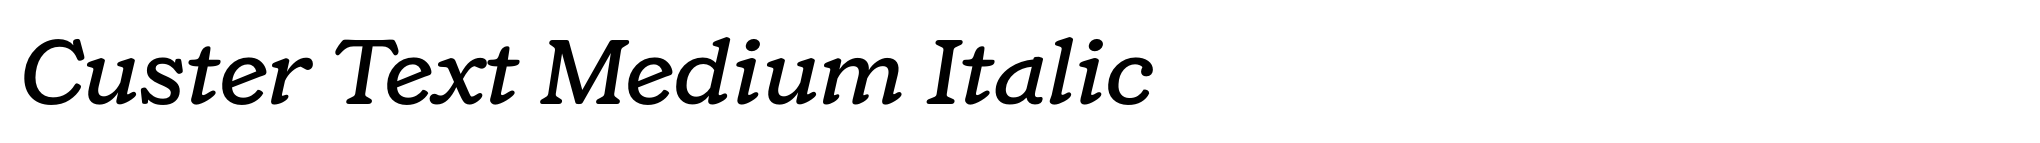 Custer Text Medium Italic image